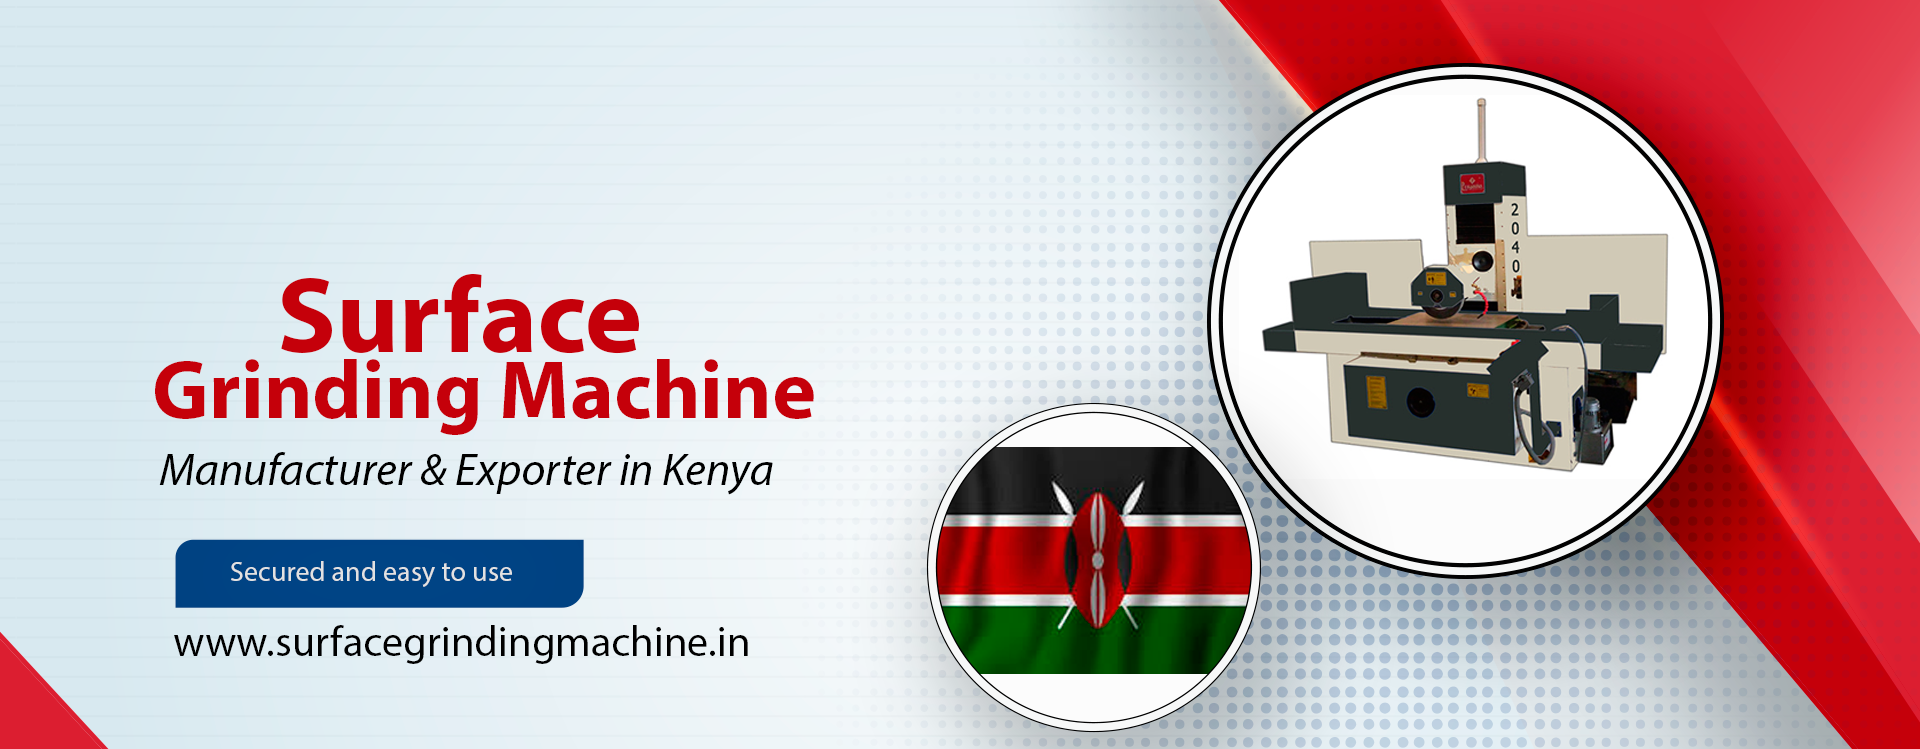 Surface Grinding Manufacturer Kenya